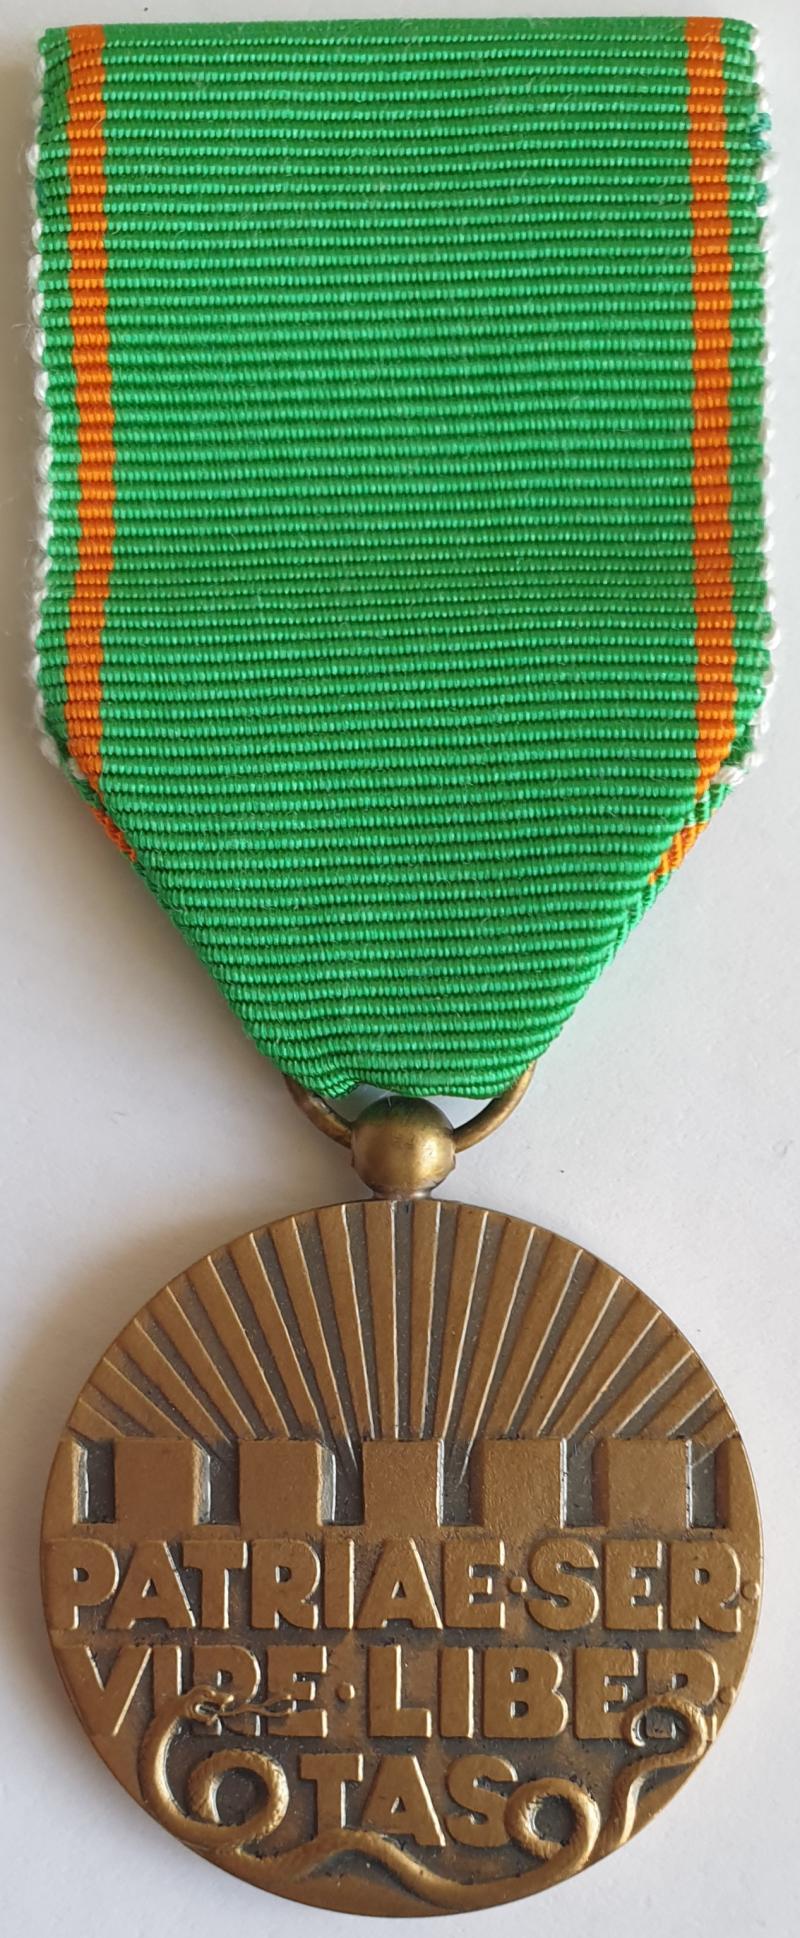 Dutch Public Order and Safety Volunteer Medal, “PATRIAE SERVIRE LIBERTAS”